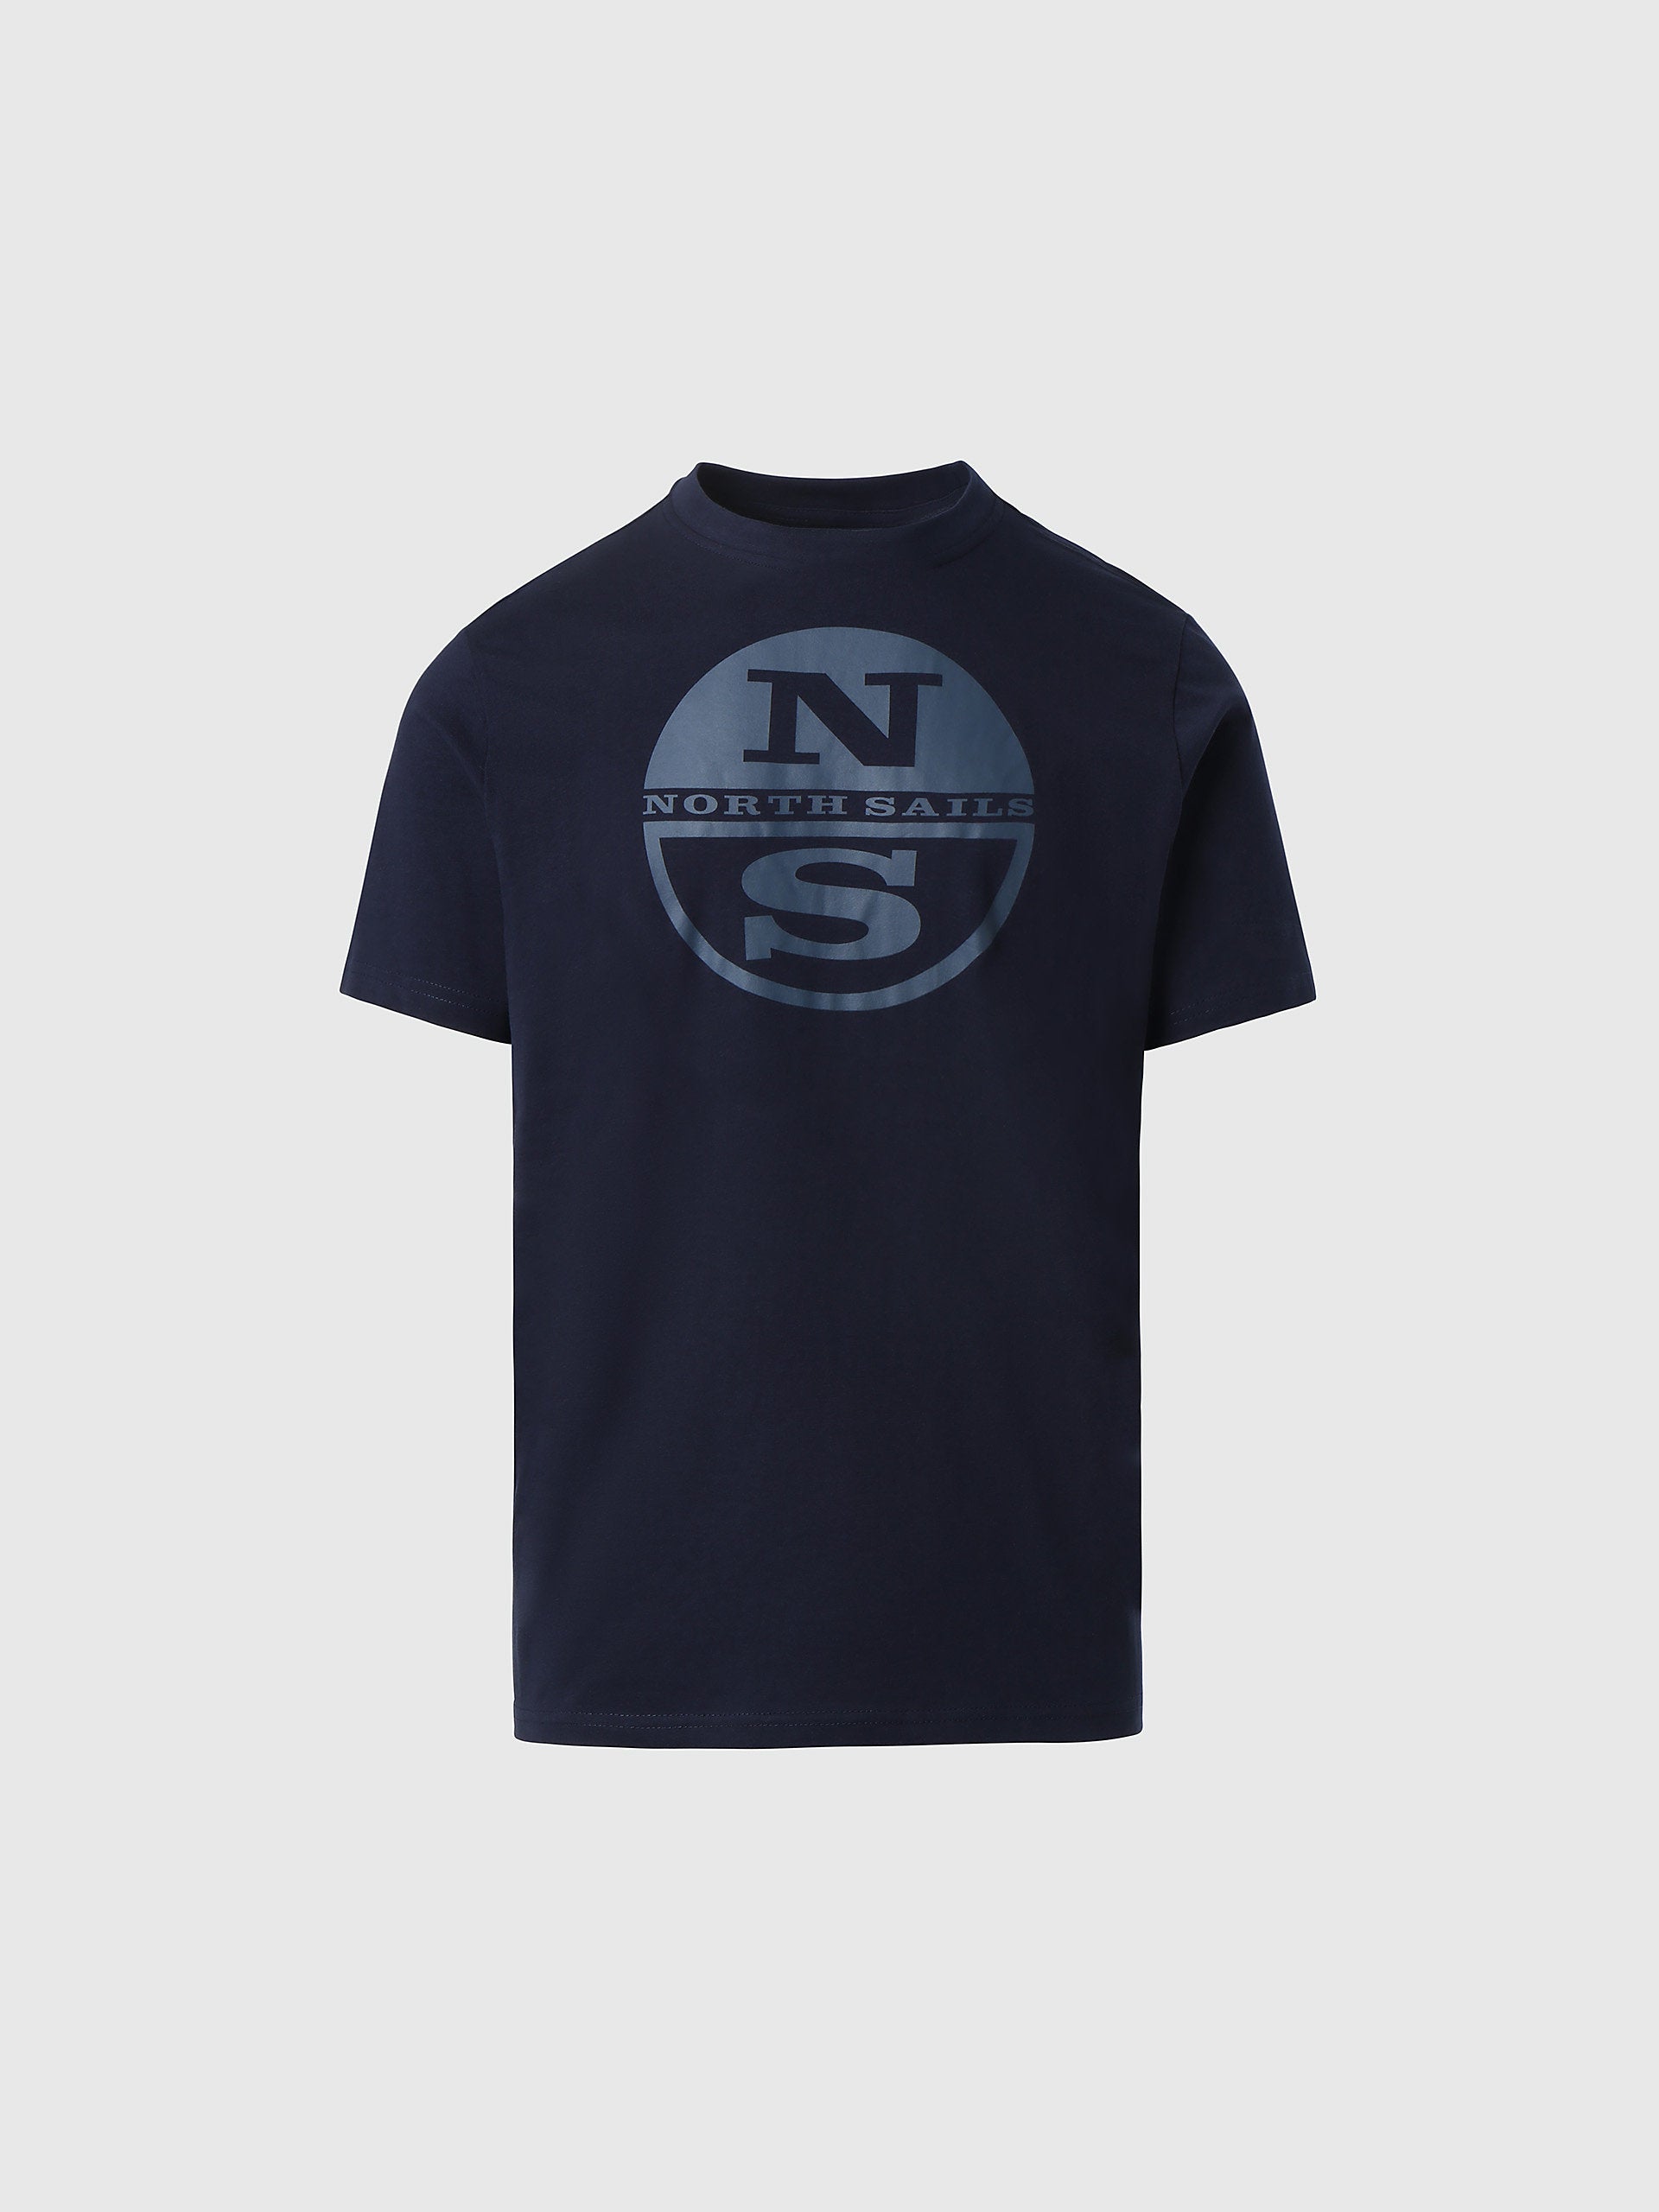 North Sails - T-shirt with maxi logoNorth SailsNavy blueS